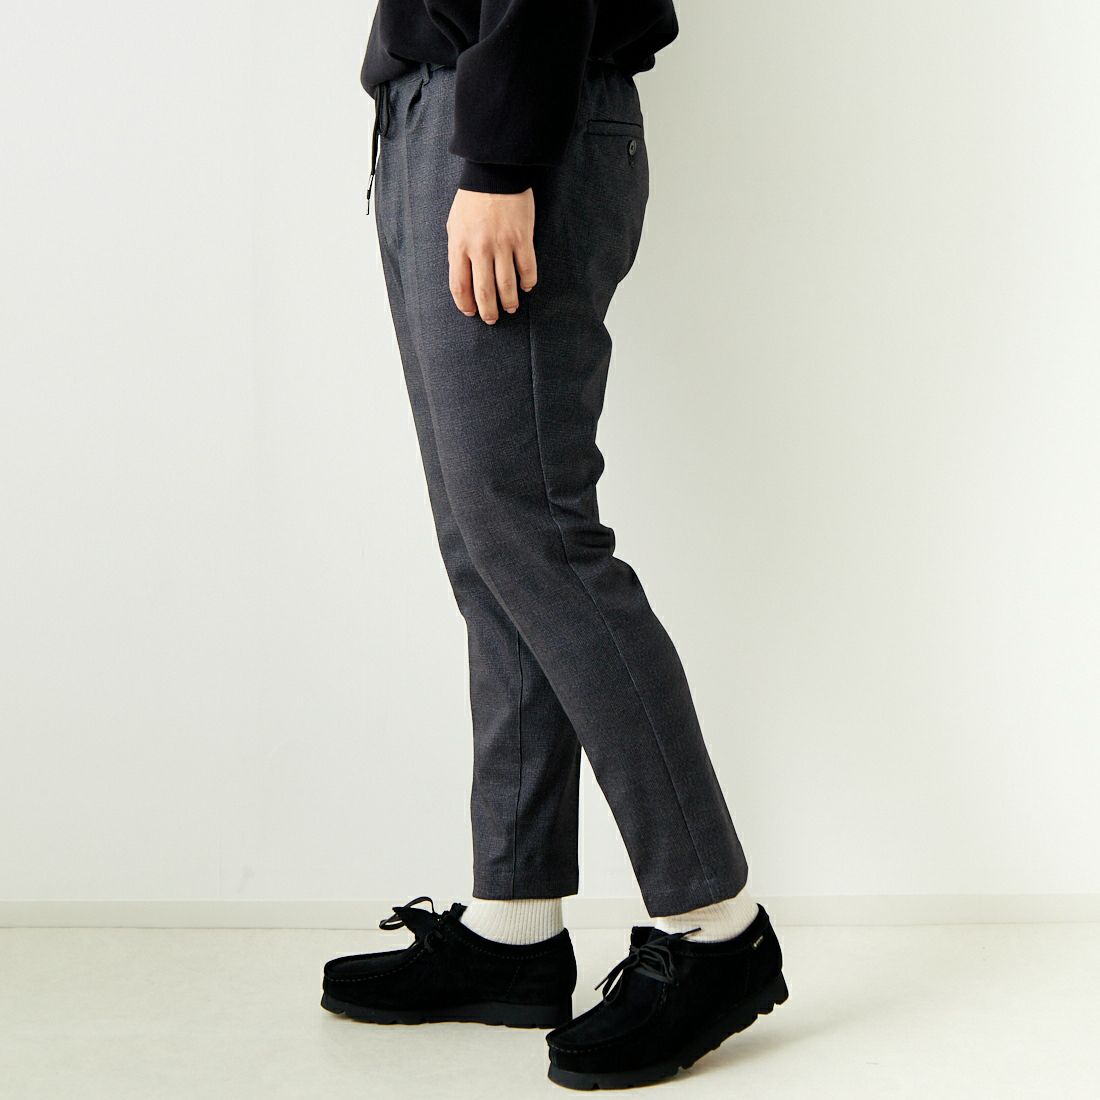 Jeans Factory Clothes [ジーンズファクトリークローズ] テックポンチ 1Pイージースラックス [JFC-242-017] 4 GRYｸﾞﾚﾝﾁ &&モデル身長：179cm 着用サイズ：M&&